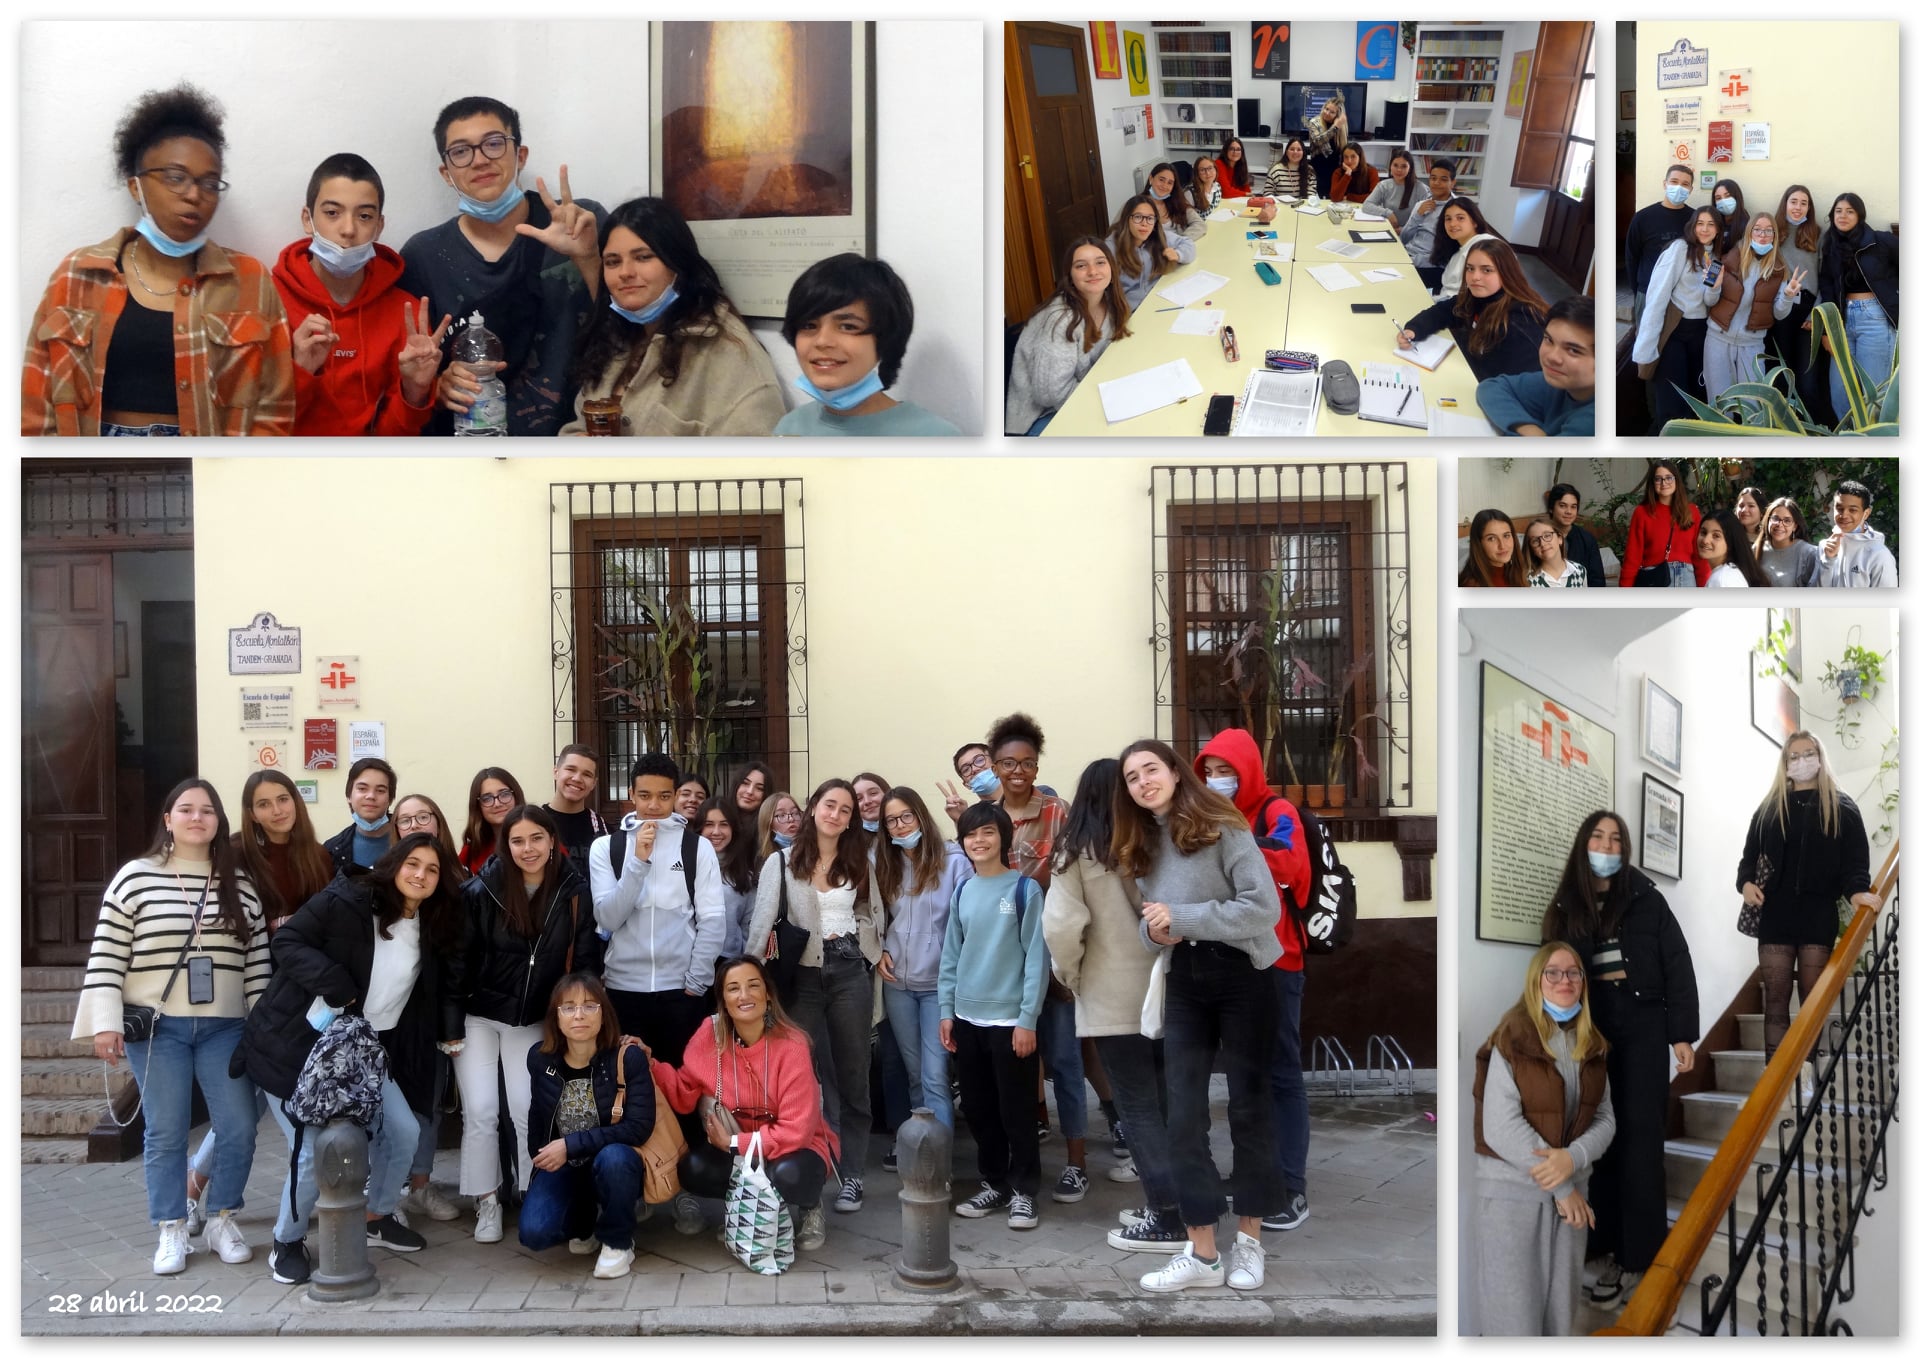 Secondary school groups in Granada